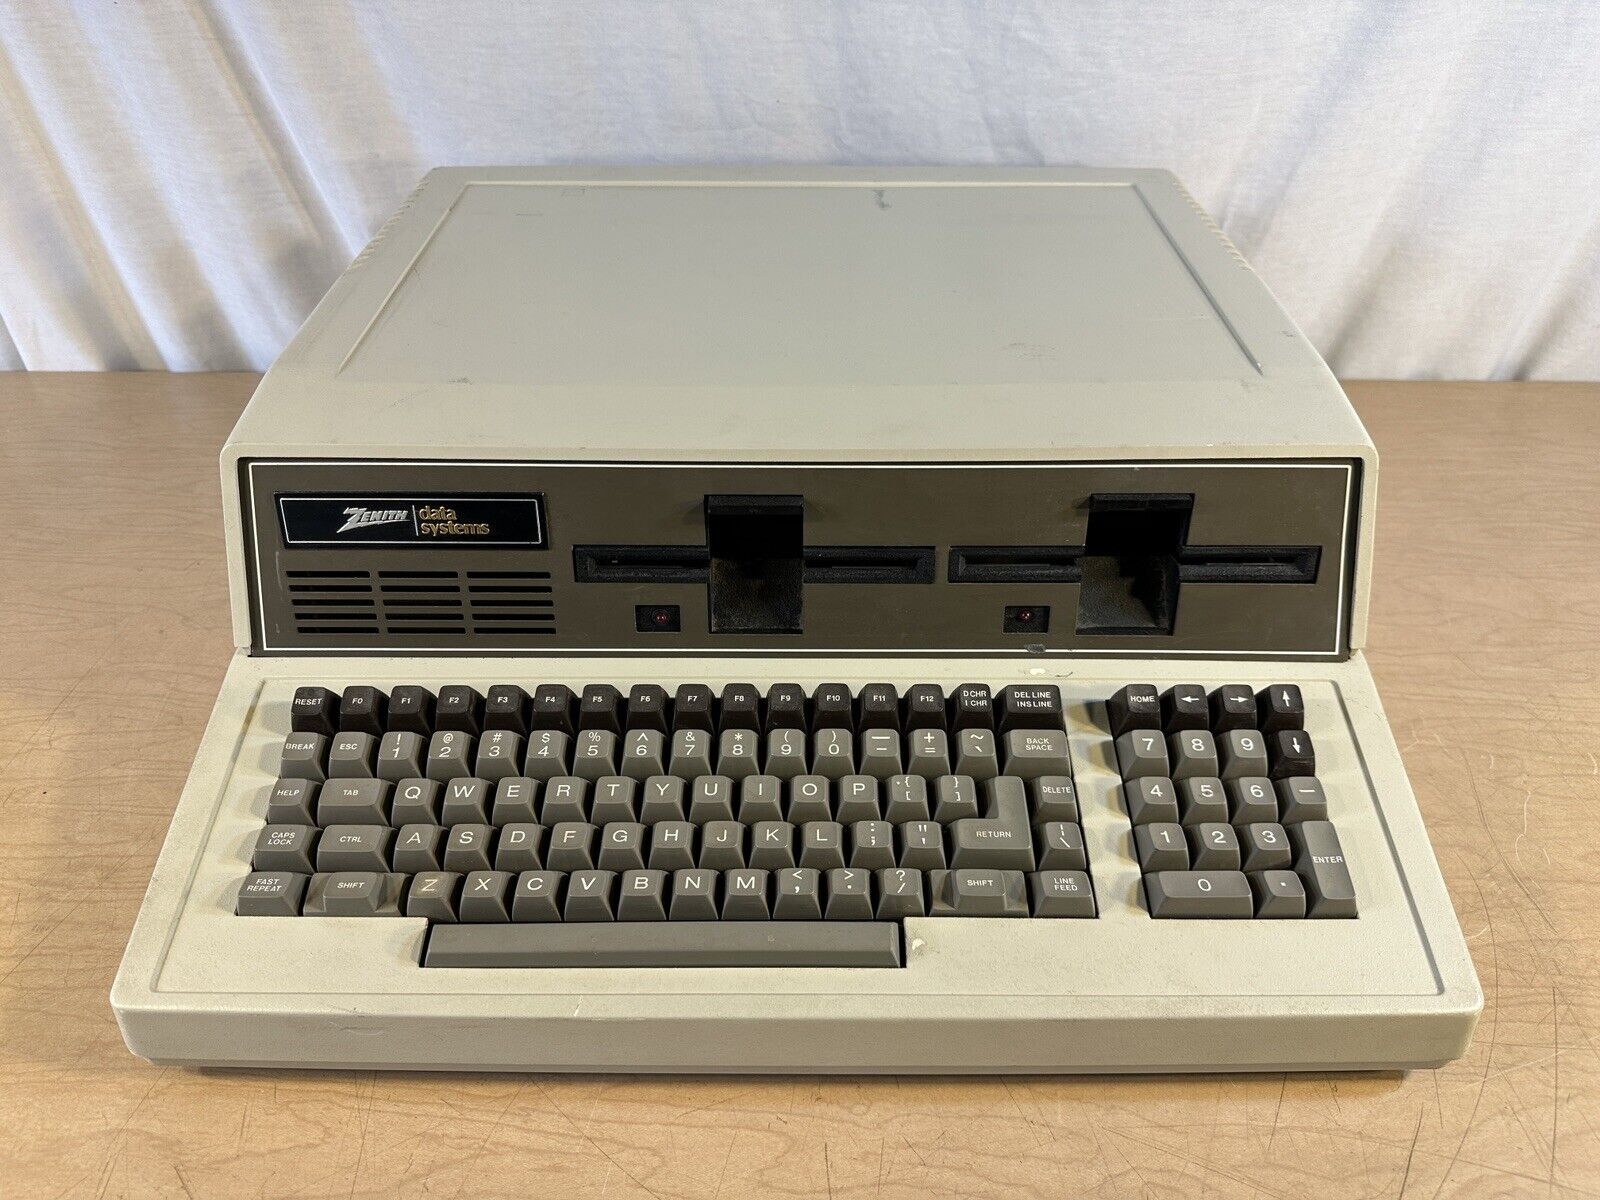 Vintage Zenith Data Systems computer